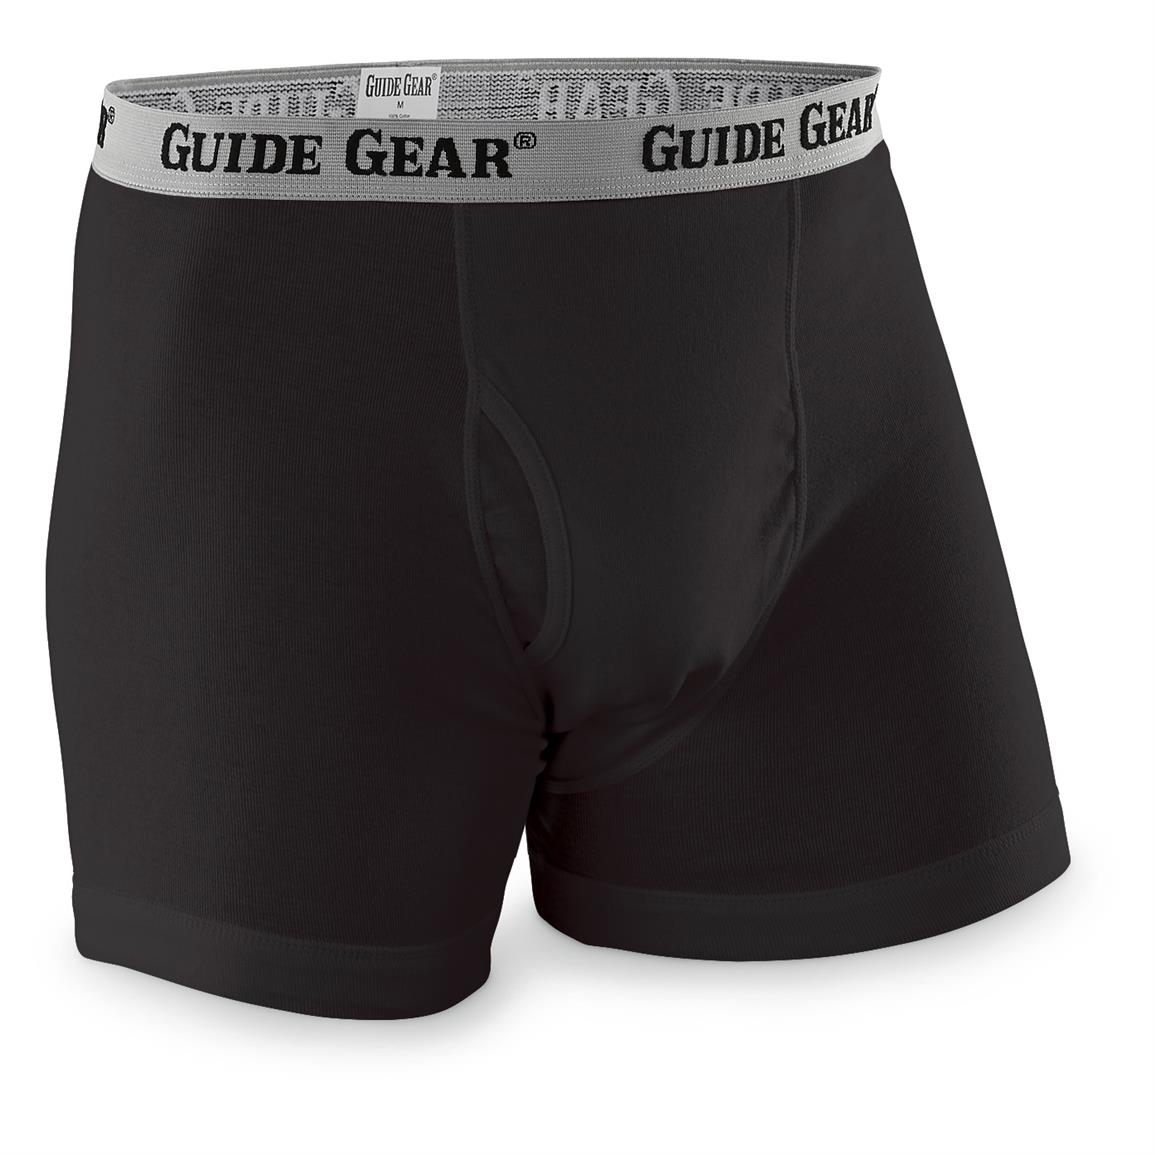 Guide Gear Men's Underwear Boxer Briefs, 6 Pack, Black